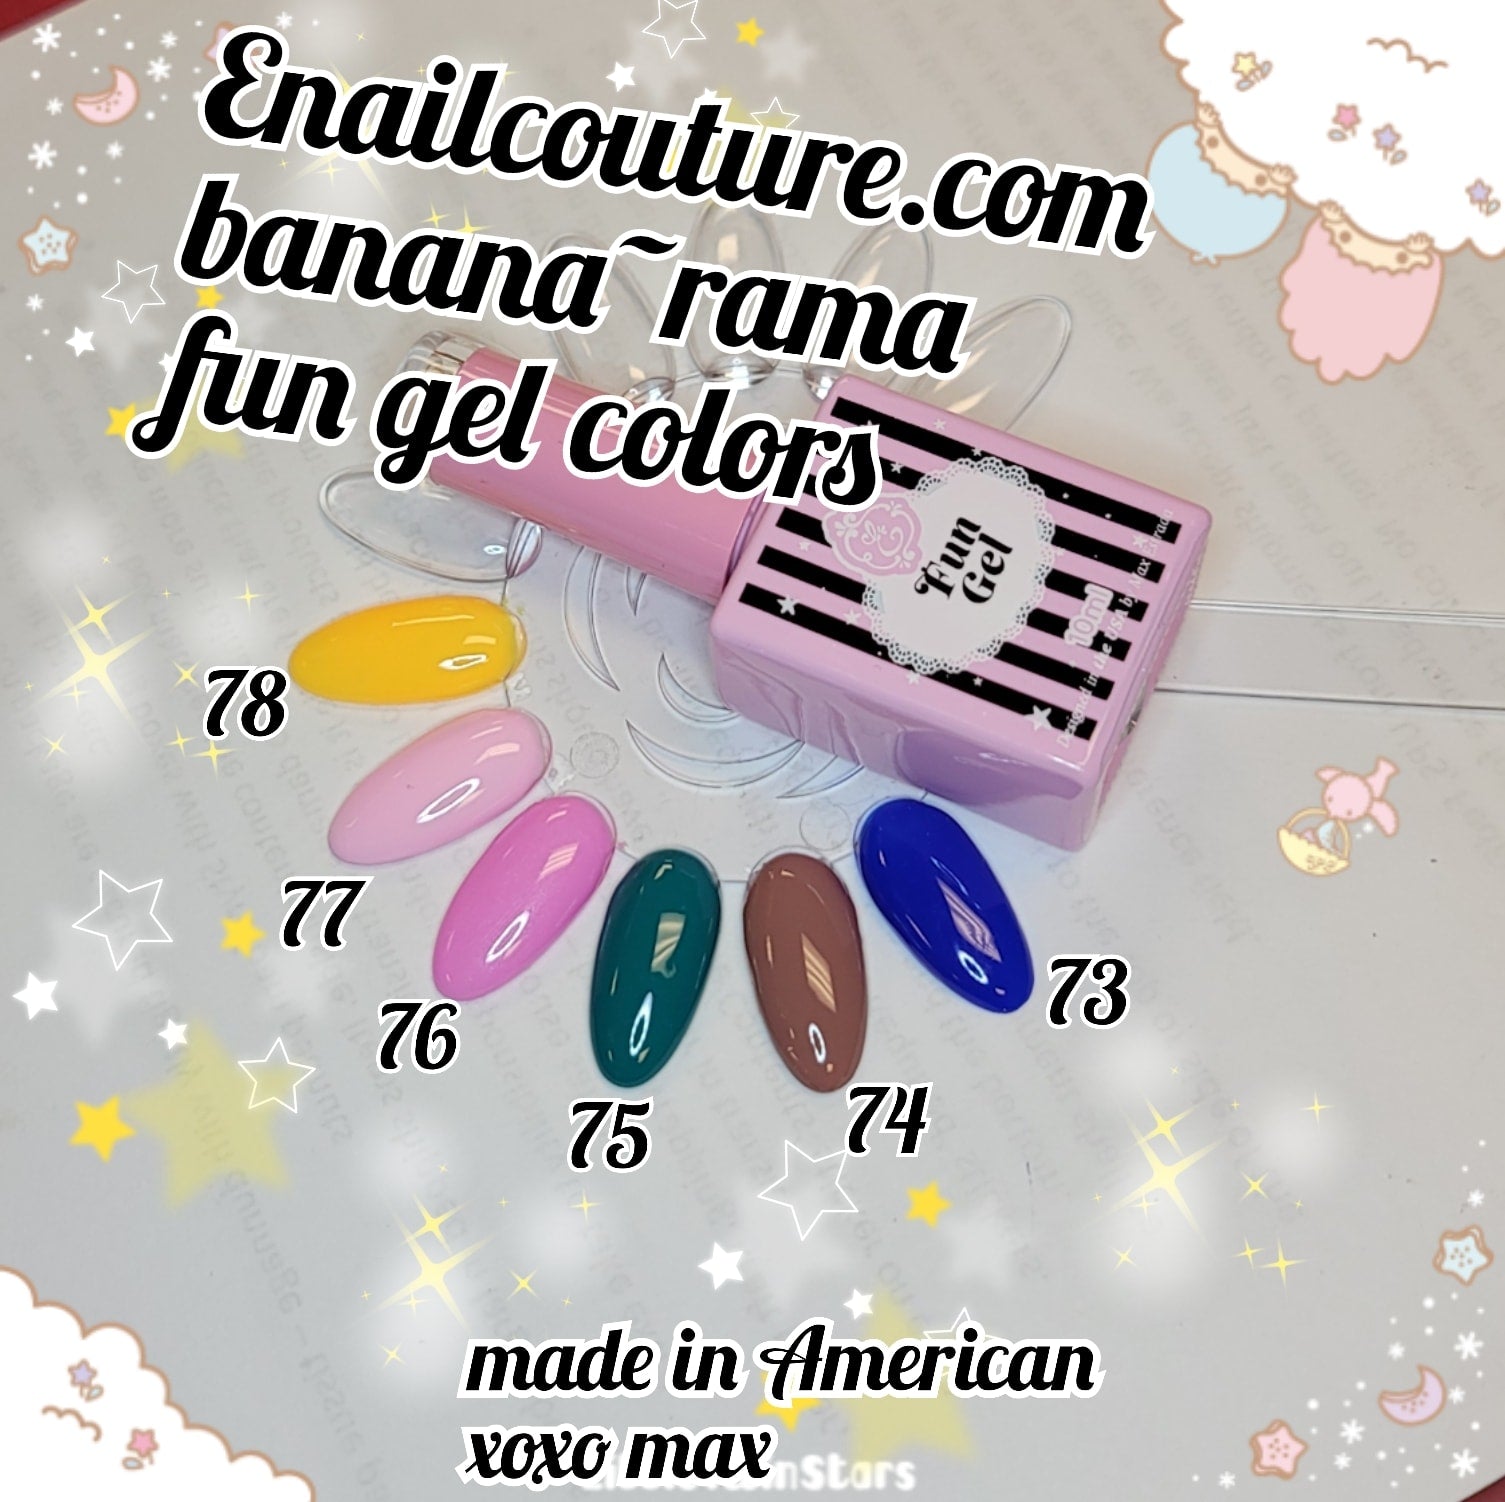 Banana~rama FUN gel collection 2020  !~ (  BEAUTY Classic Gel Nail Polish Set - Colors Gel Polish Kit Popular Nail Art Design Soak Off LED Lamp Nail Polish Gel Manicure)